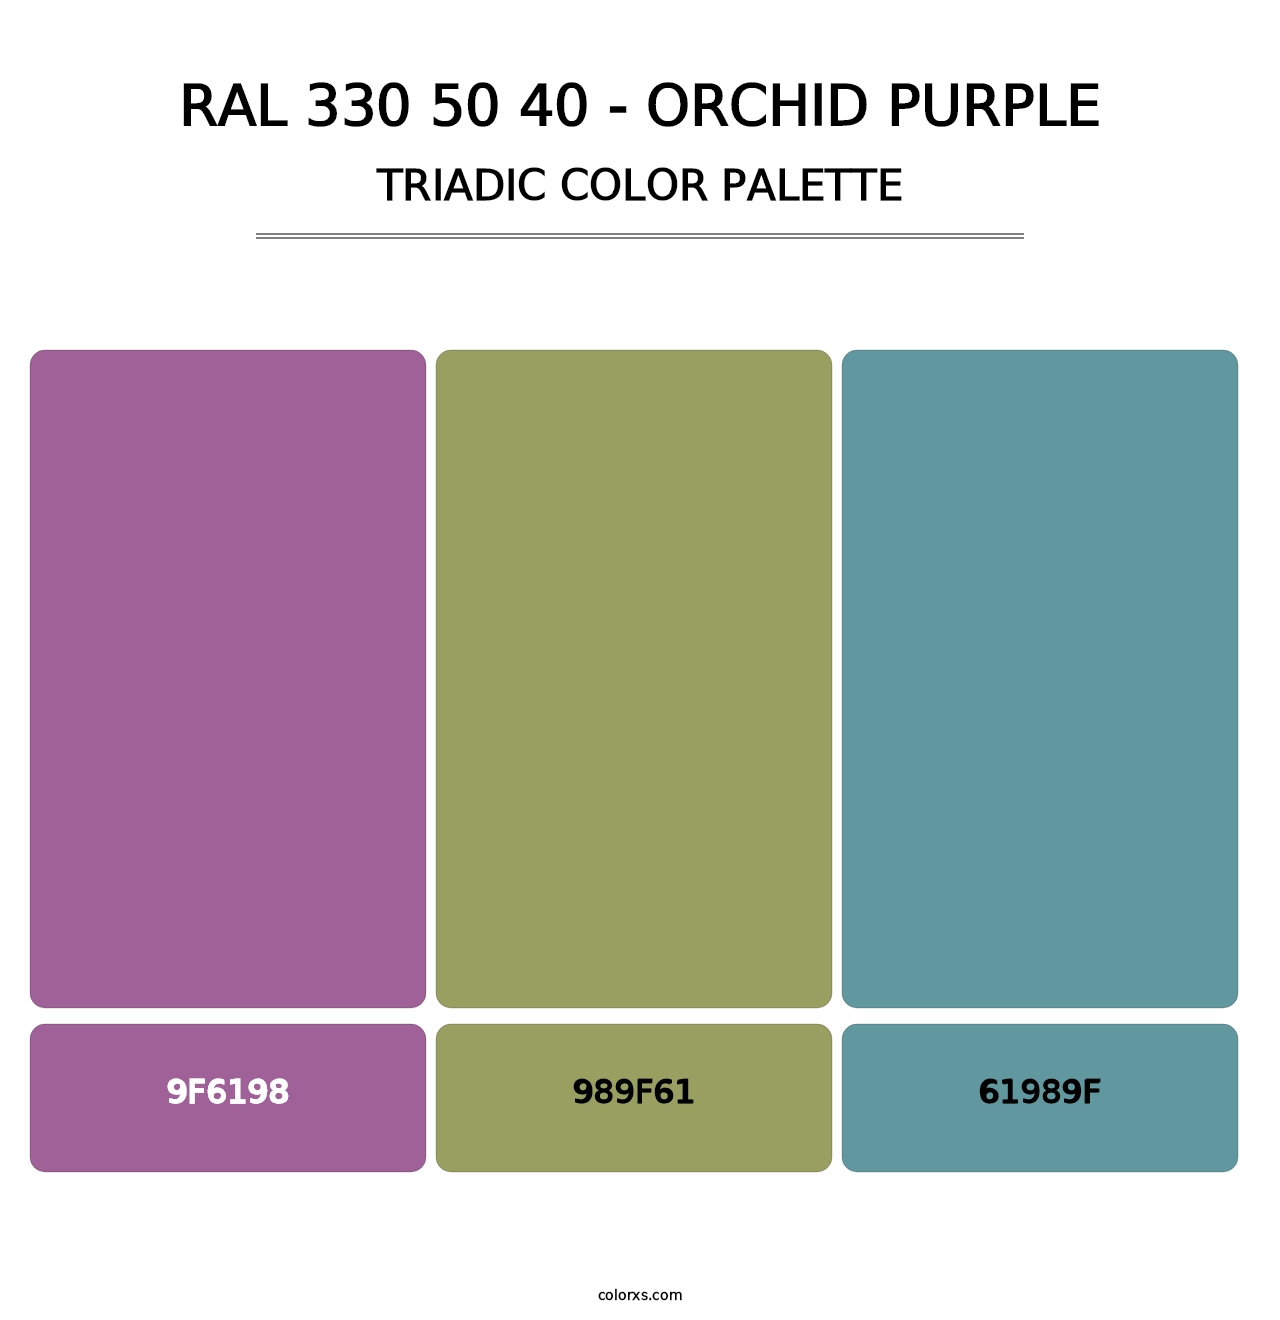 RAL 330 50 40 - Orchid Purple - Triadic Color Palette